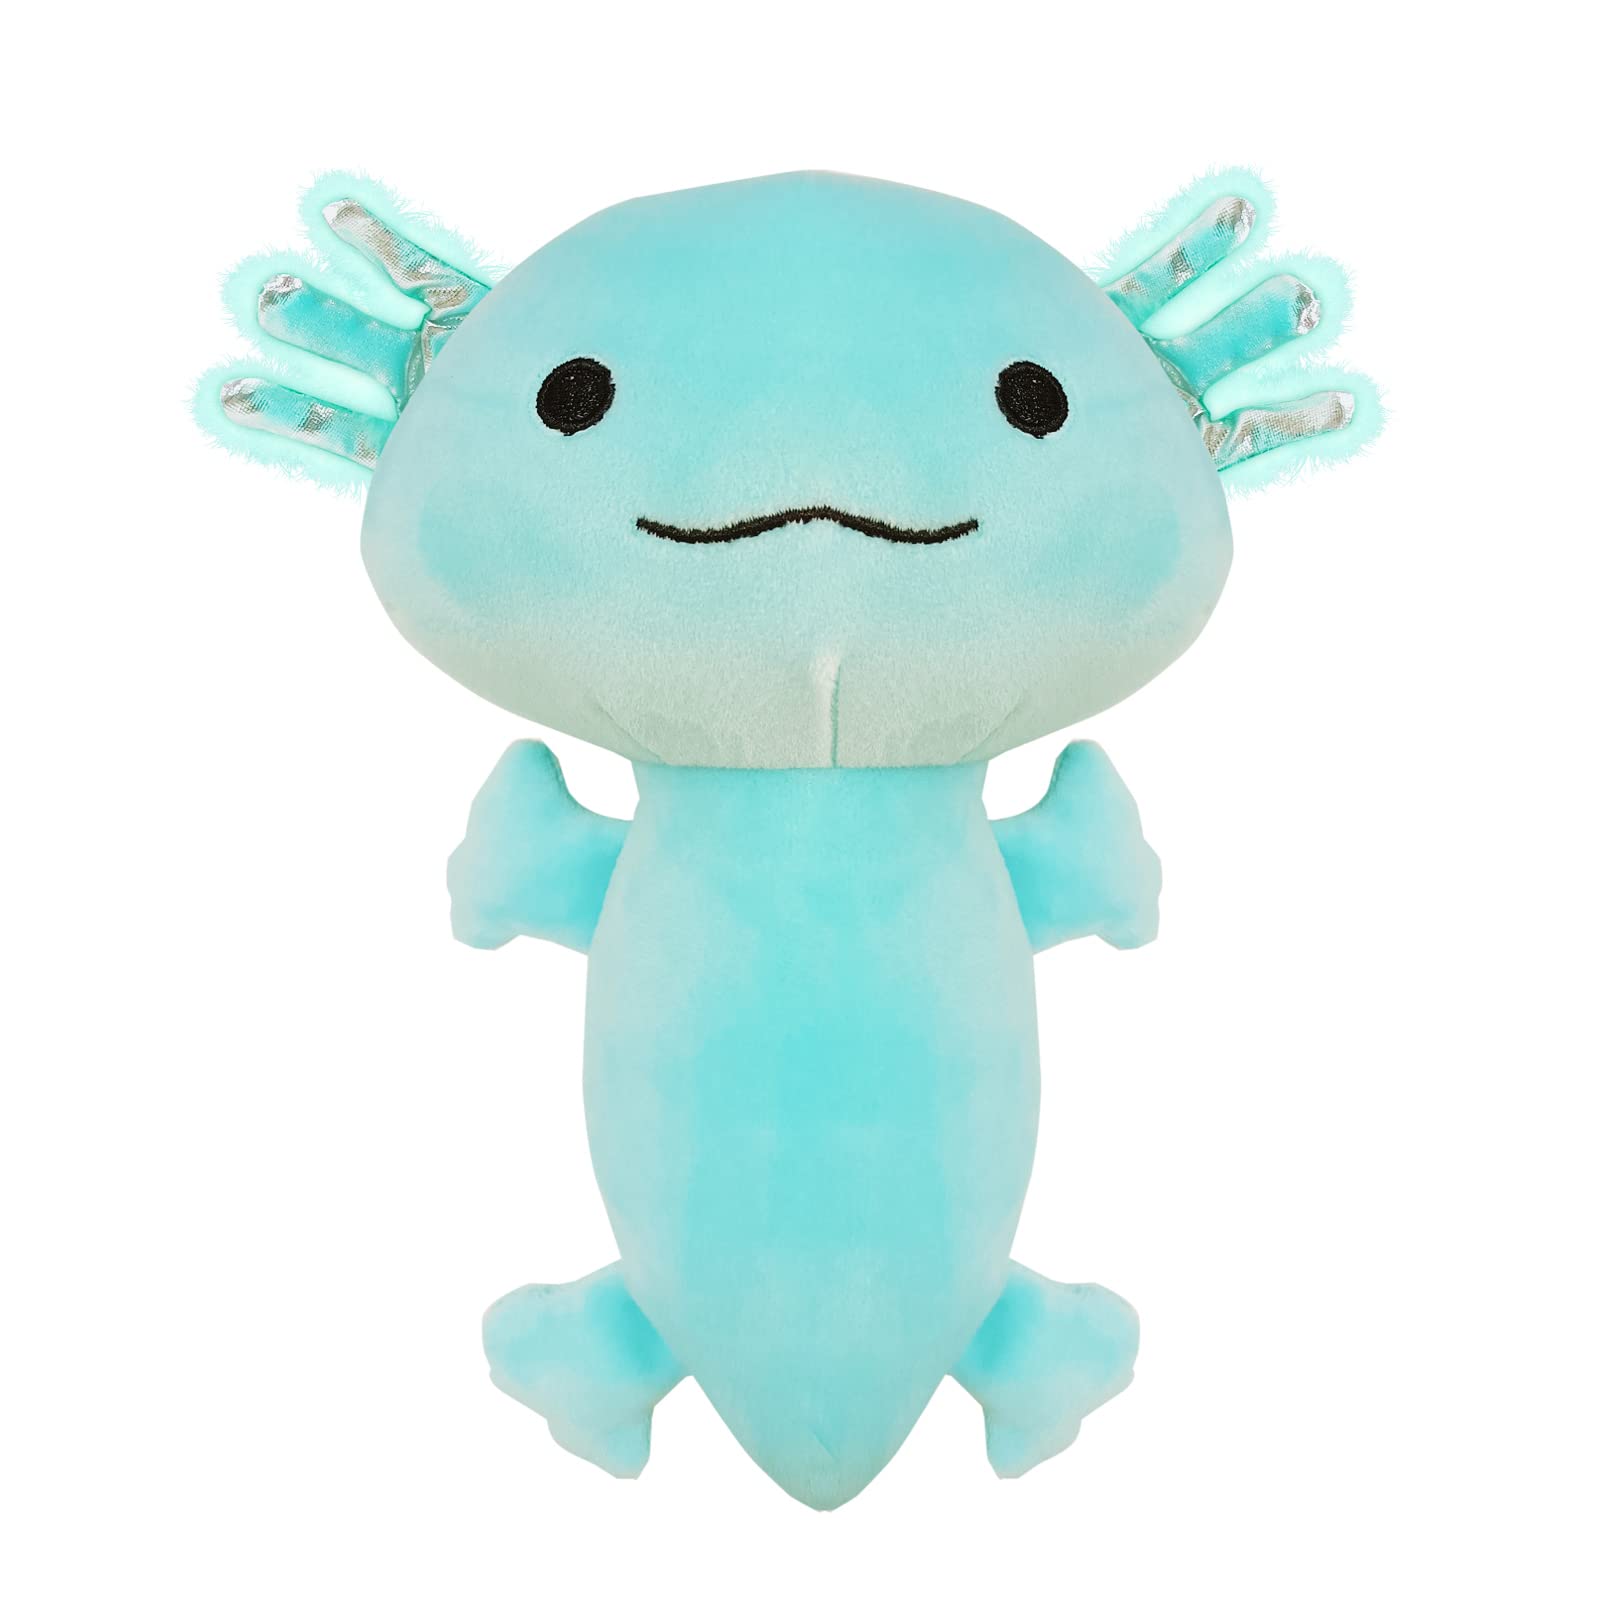 1 Pcs Axolotl Plush Doll Toys, 9.8 Inch Cute Animal Stuffed Plush Doll, Soft Axolotl Plush Gifts Prizes for Kids (Blue)